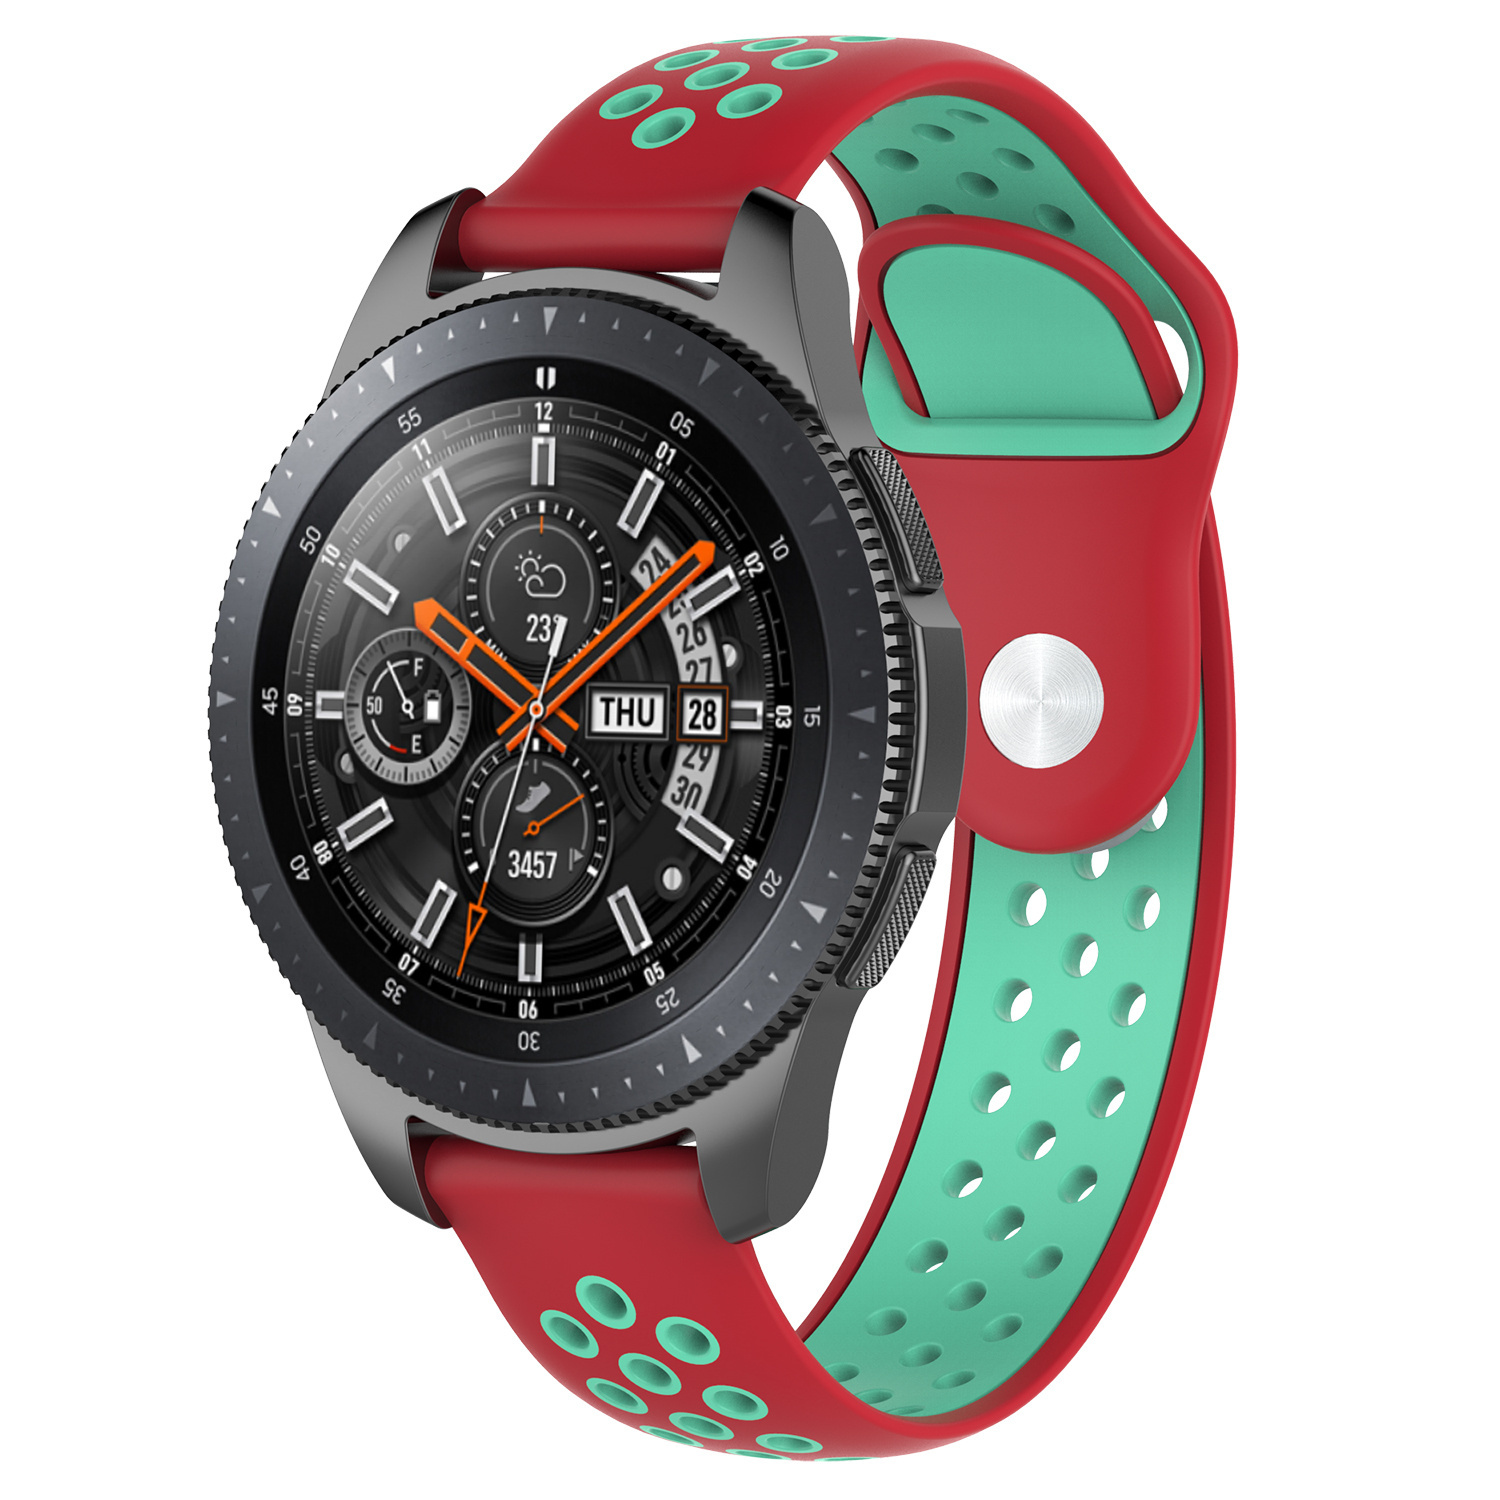 Cinturino doppio sport per Huawei Watch GT - rosso verde acqua